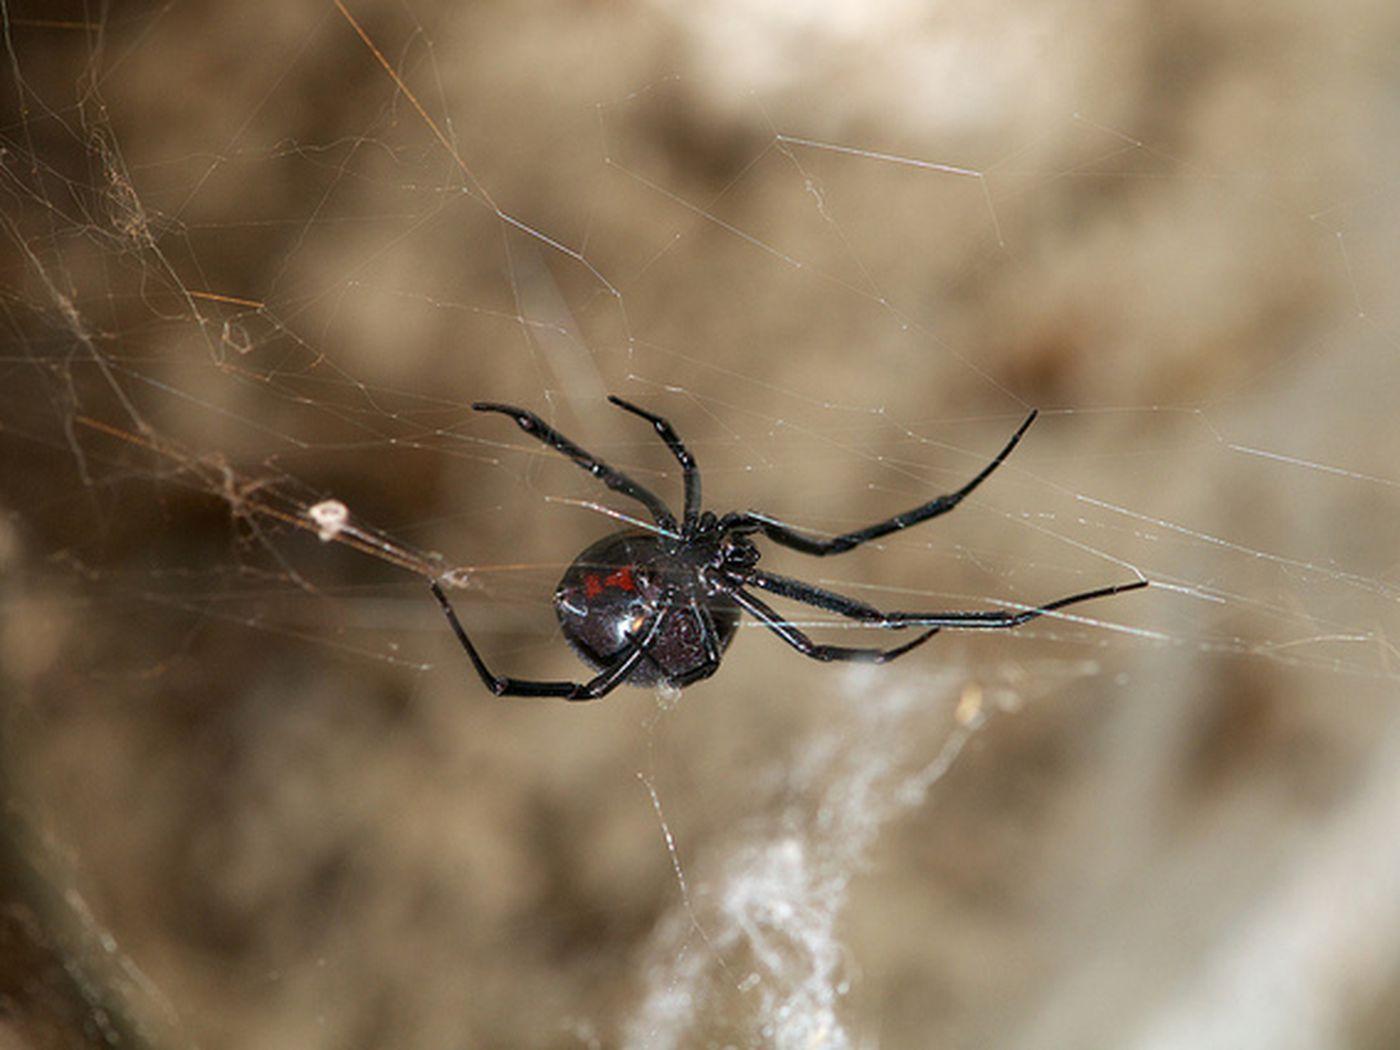 This virus steals DNA from black widow spider venom to attack its